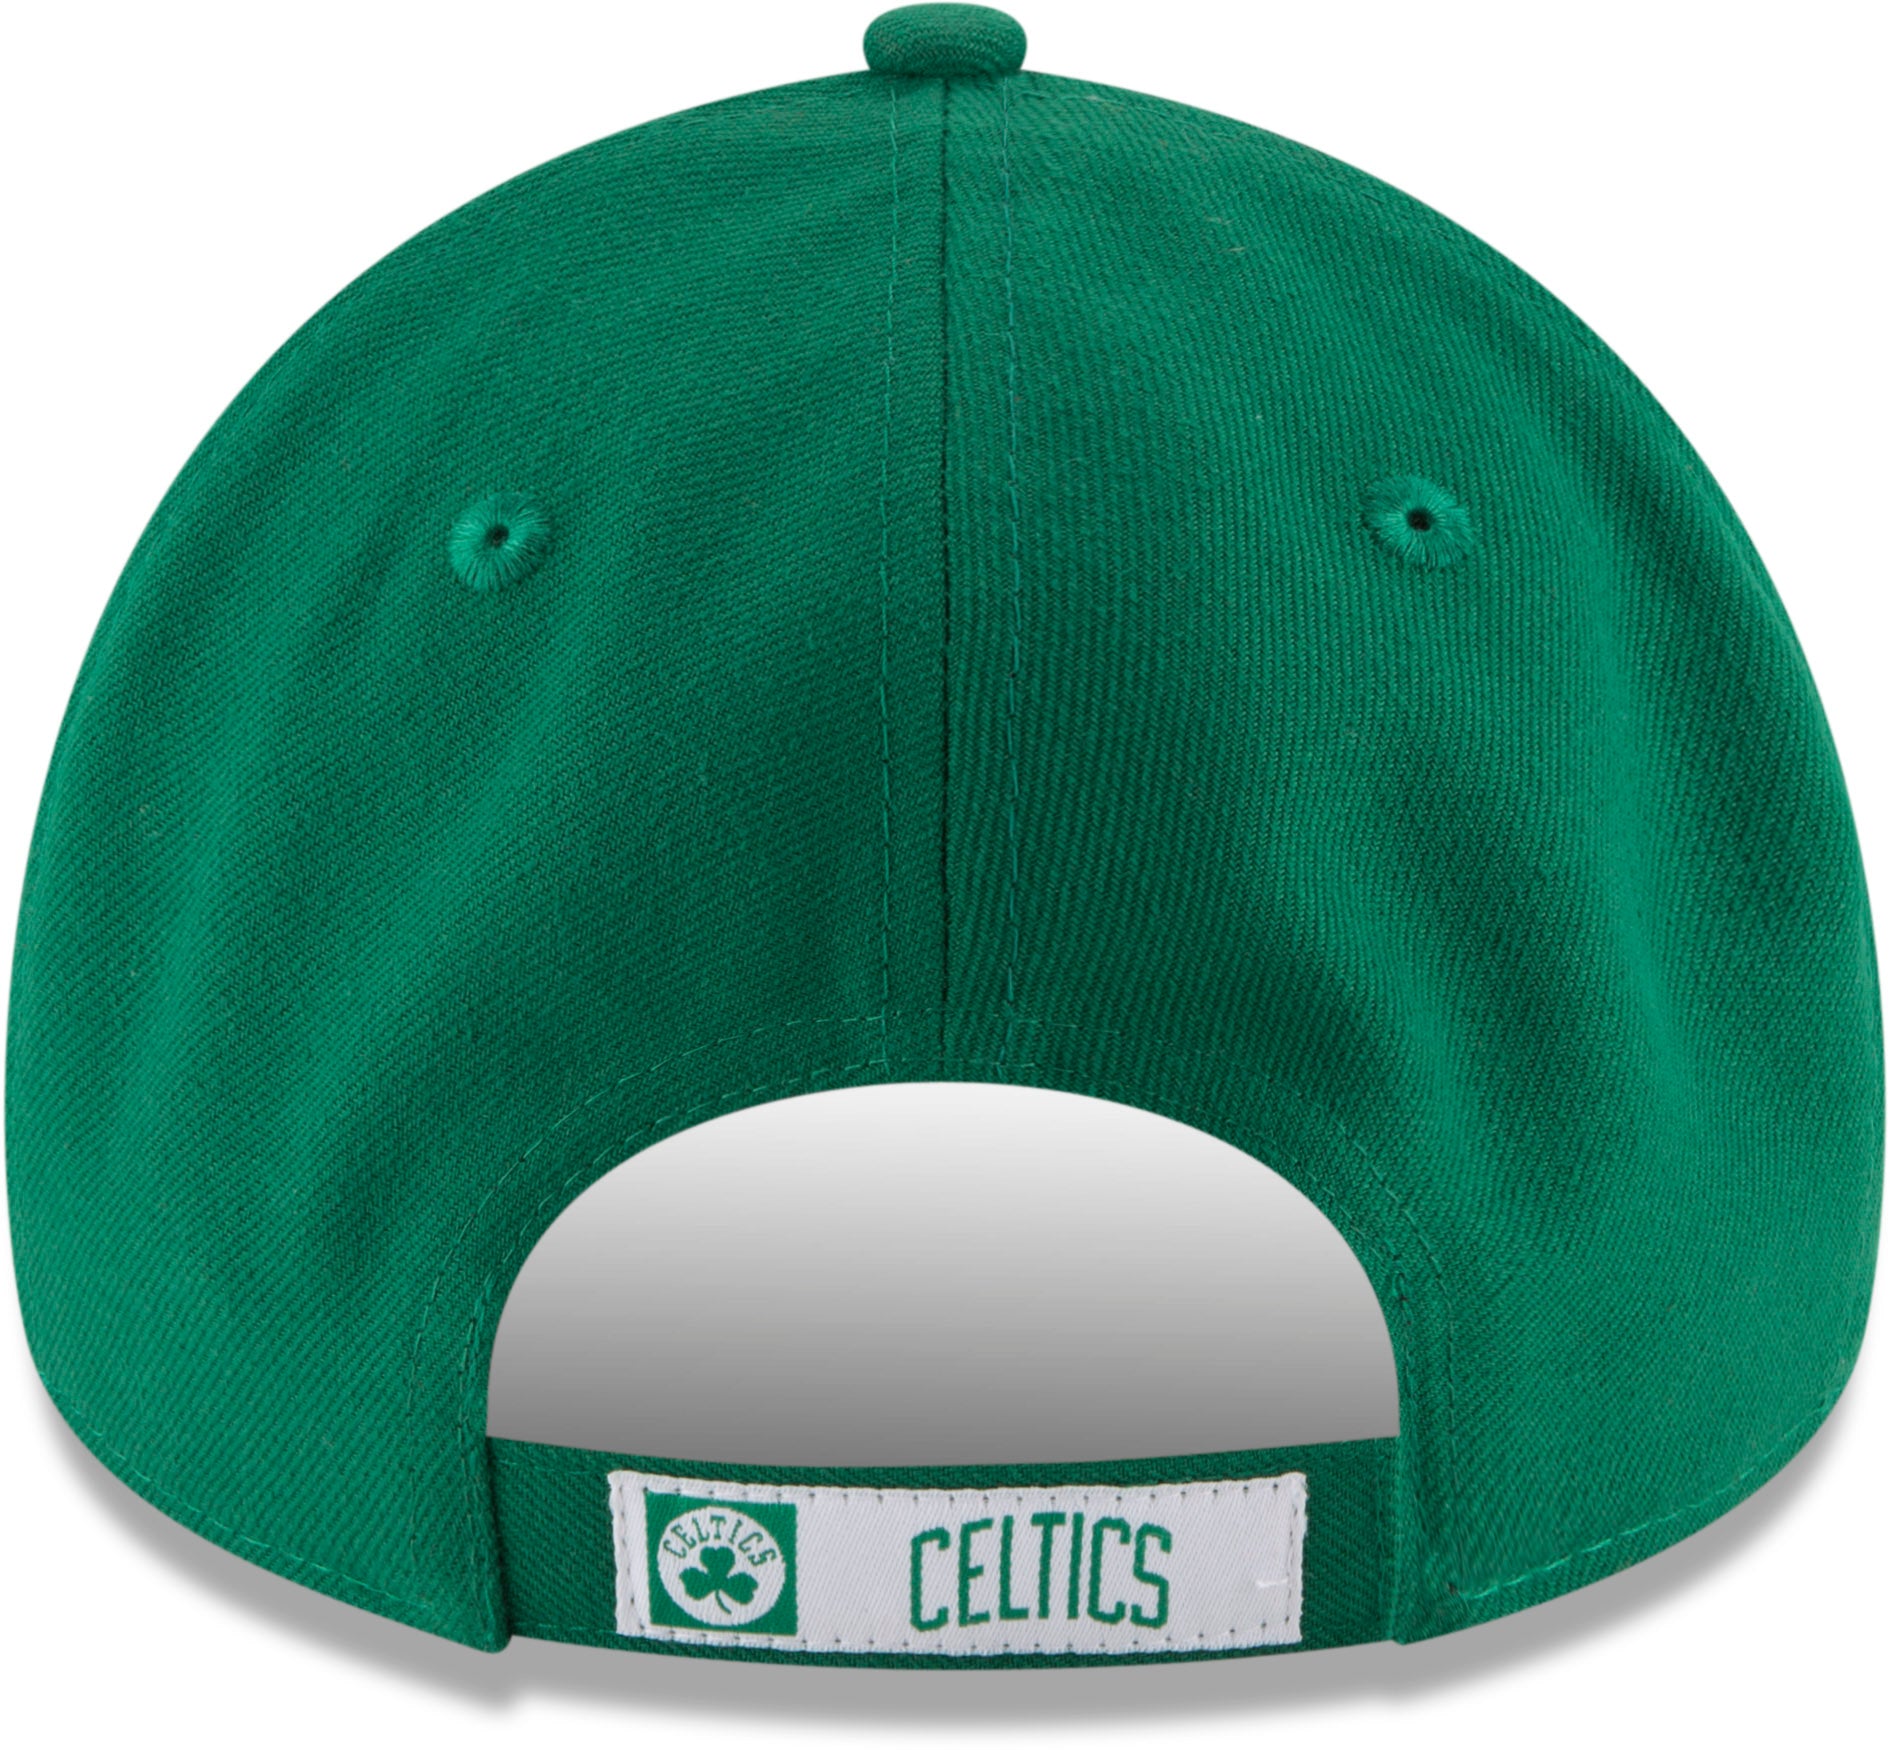 New era NBA The League Boston Celtics OTC Cap Green